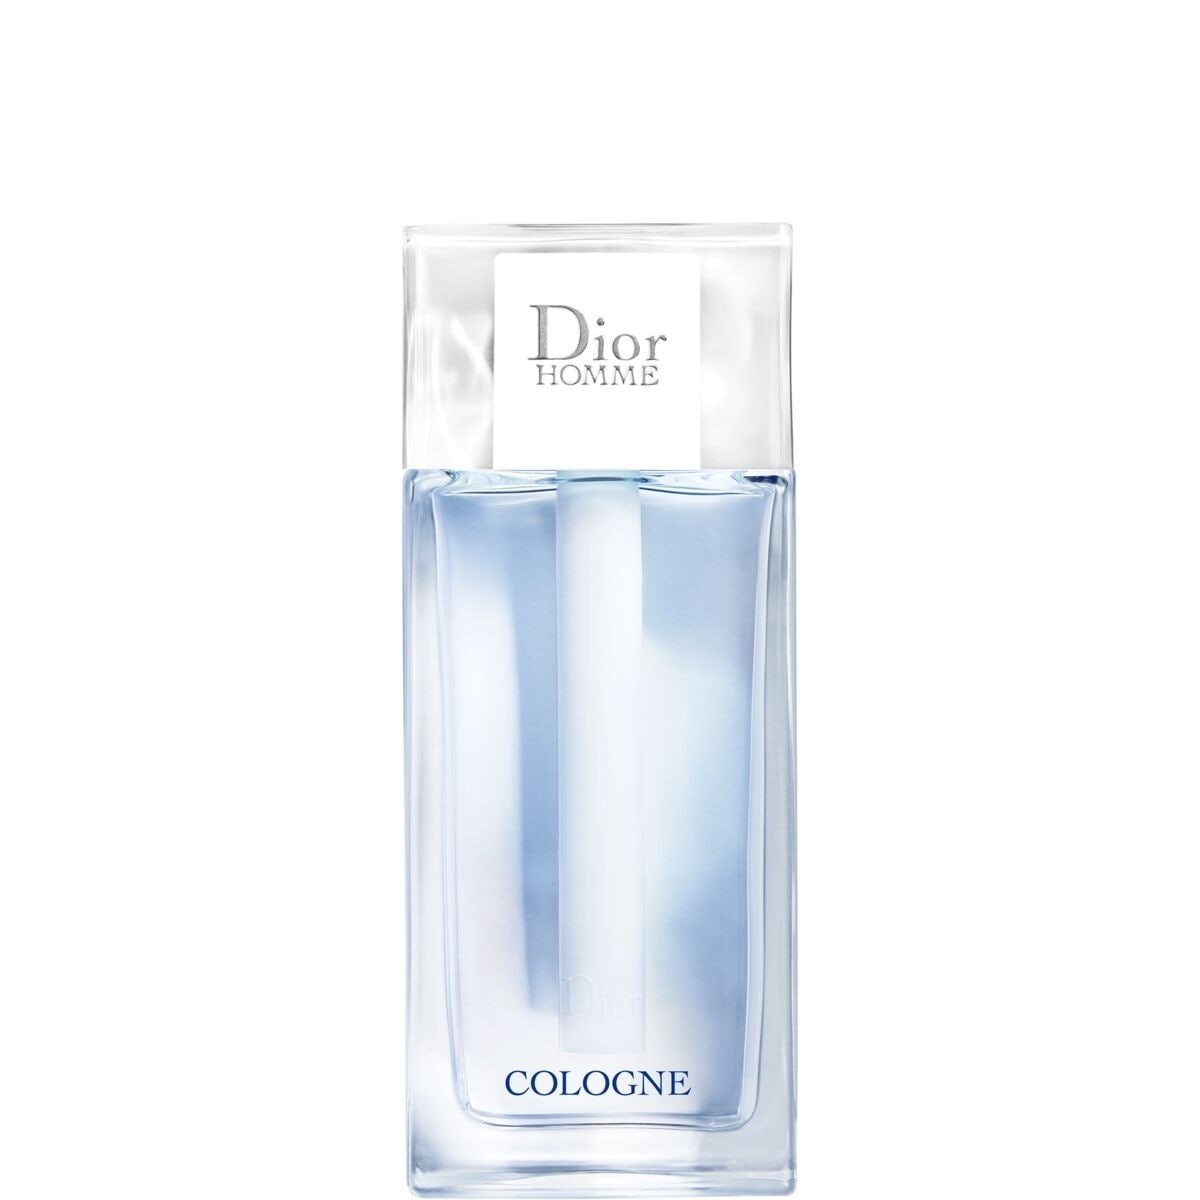 DIOR - Dior Homme Cologne - 200 ml